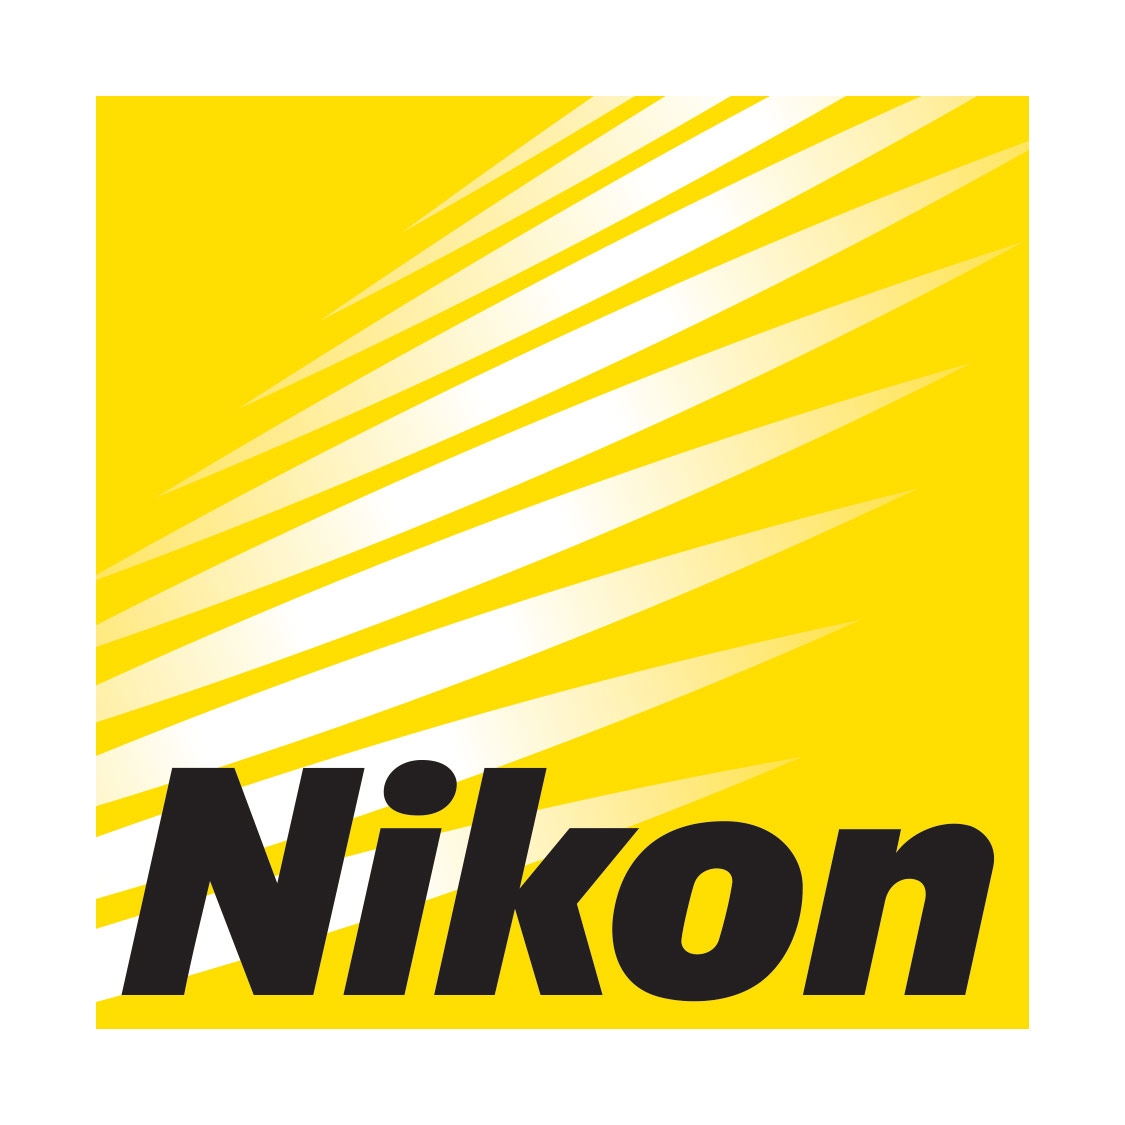 Nikon DK-27 Eyepiece Adapter for D5